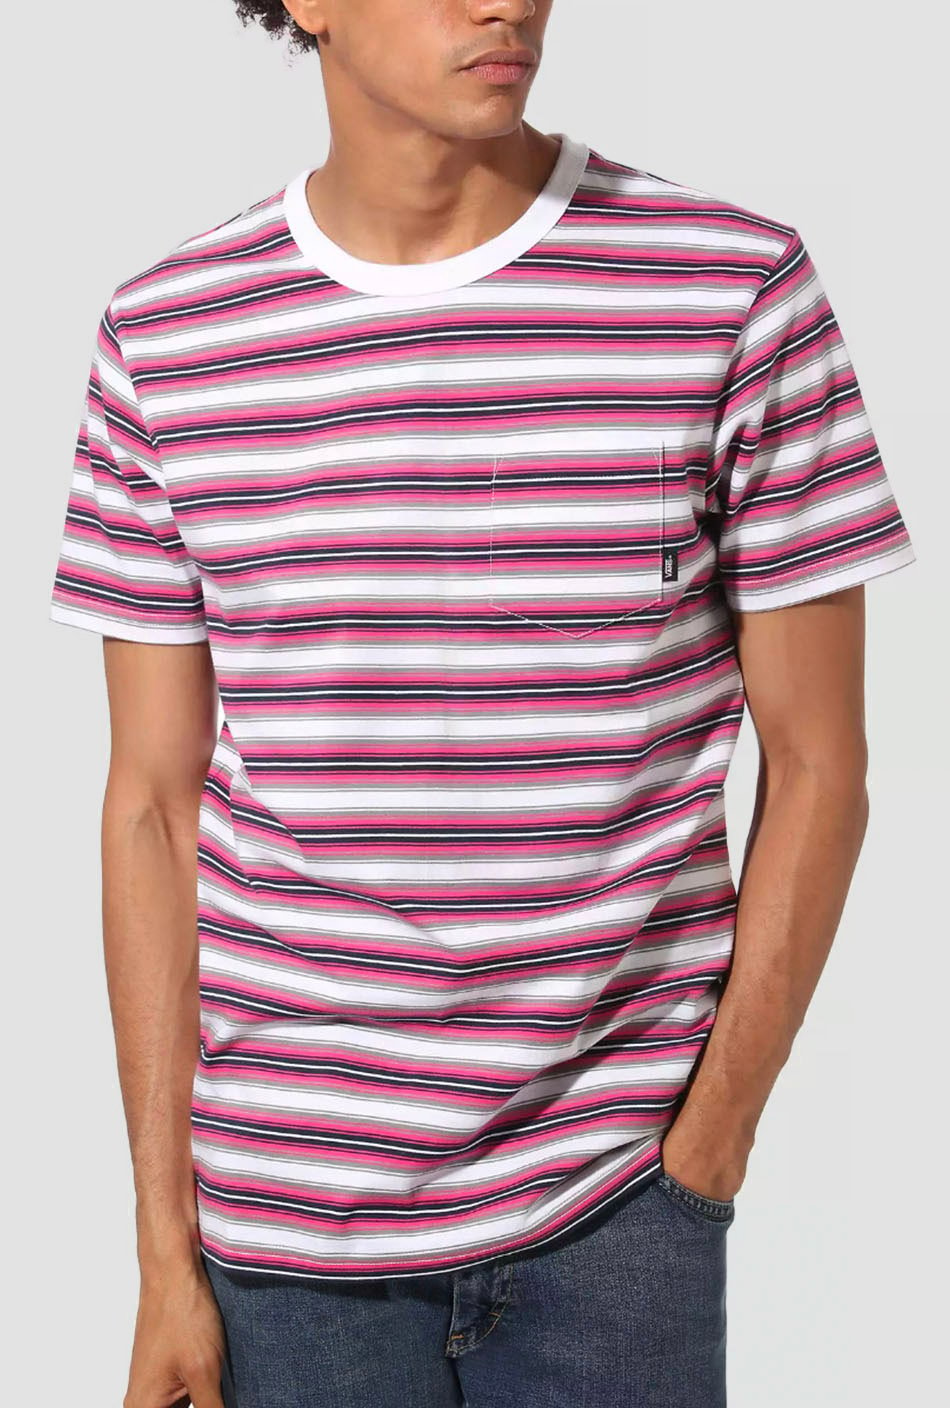 Vans Knollwood Stripe T-Shirt